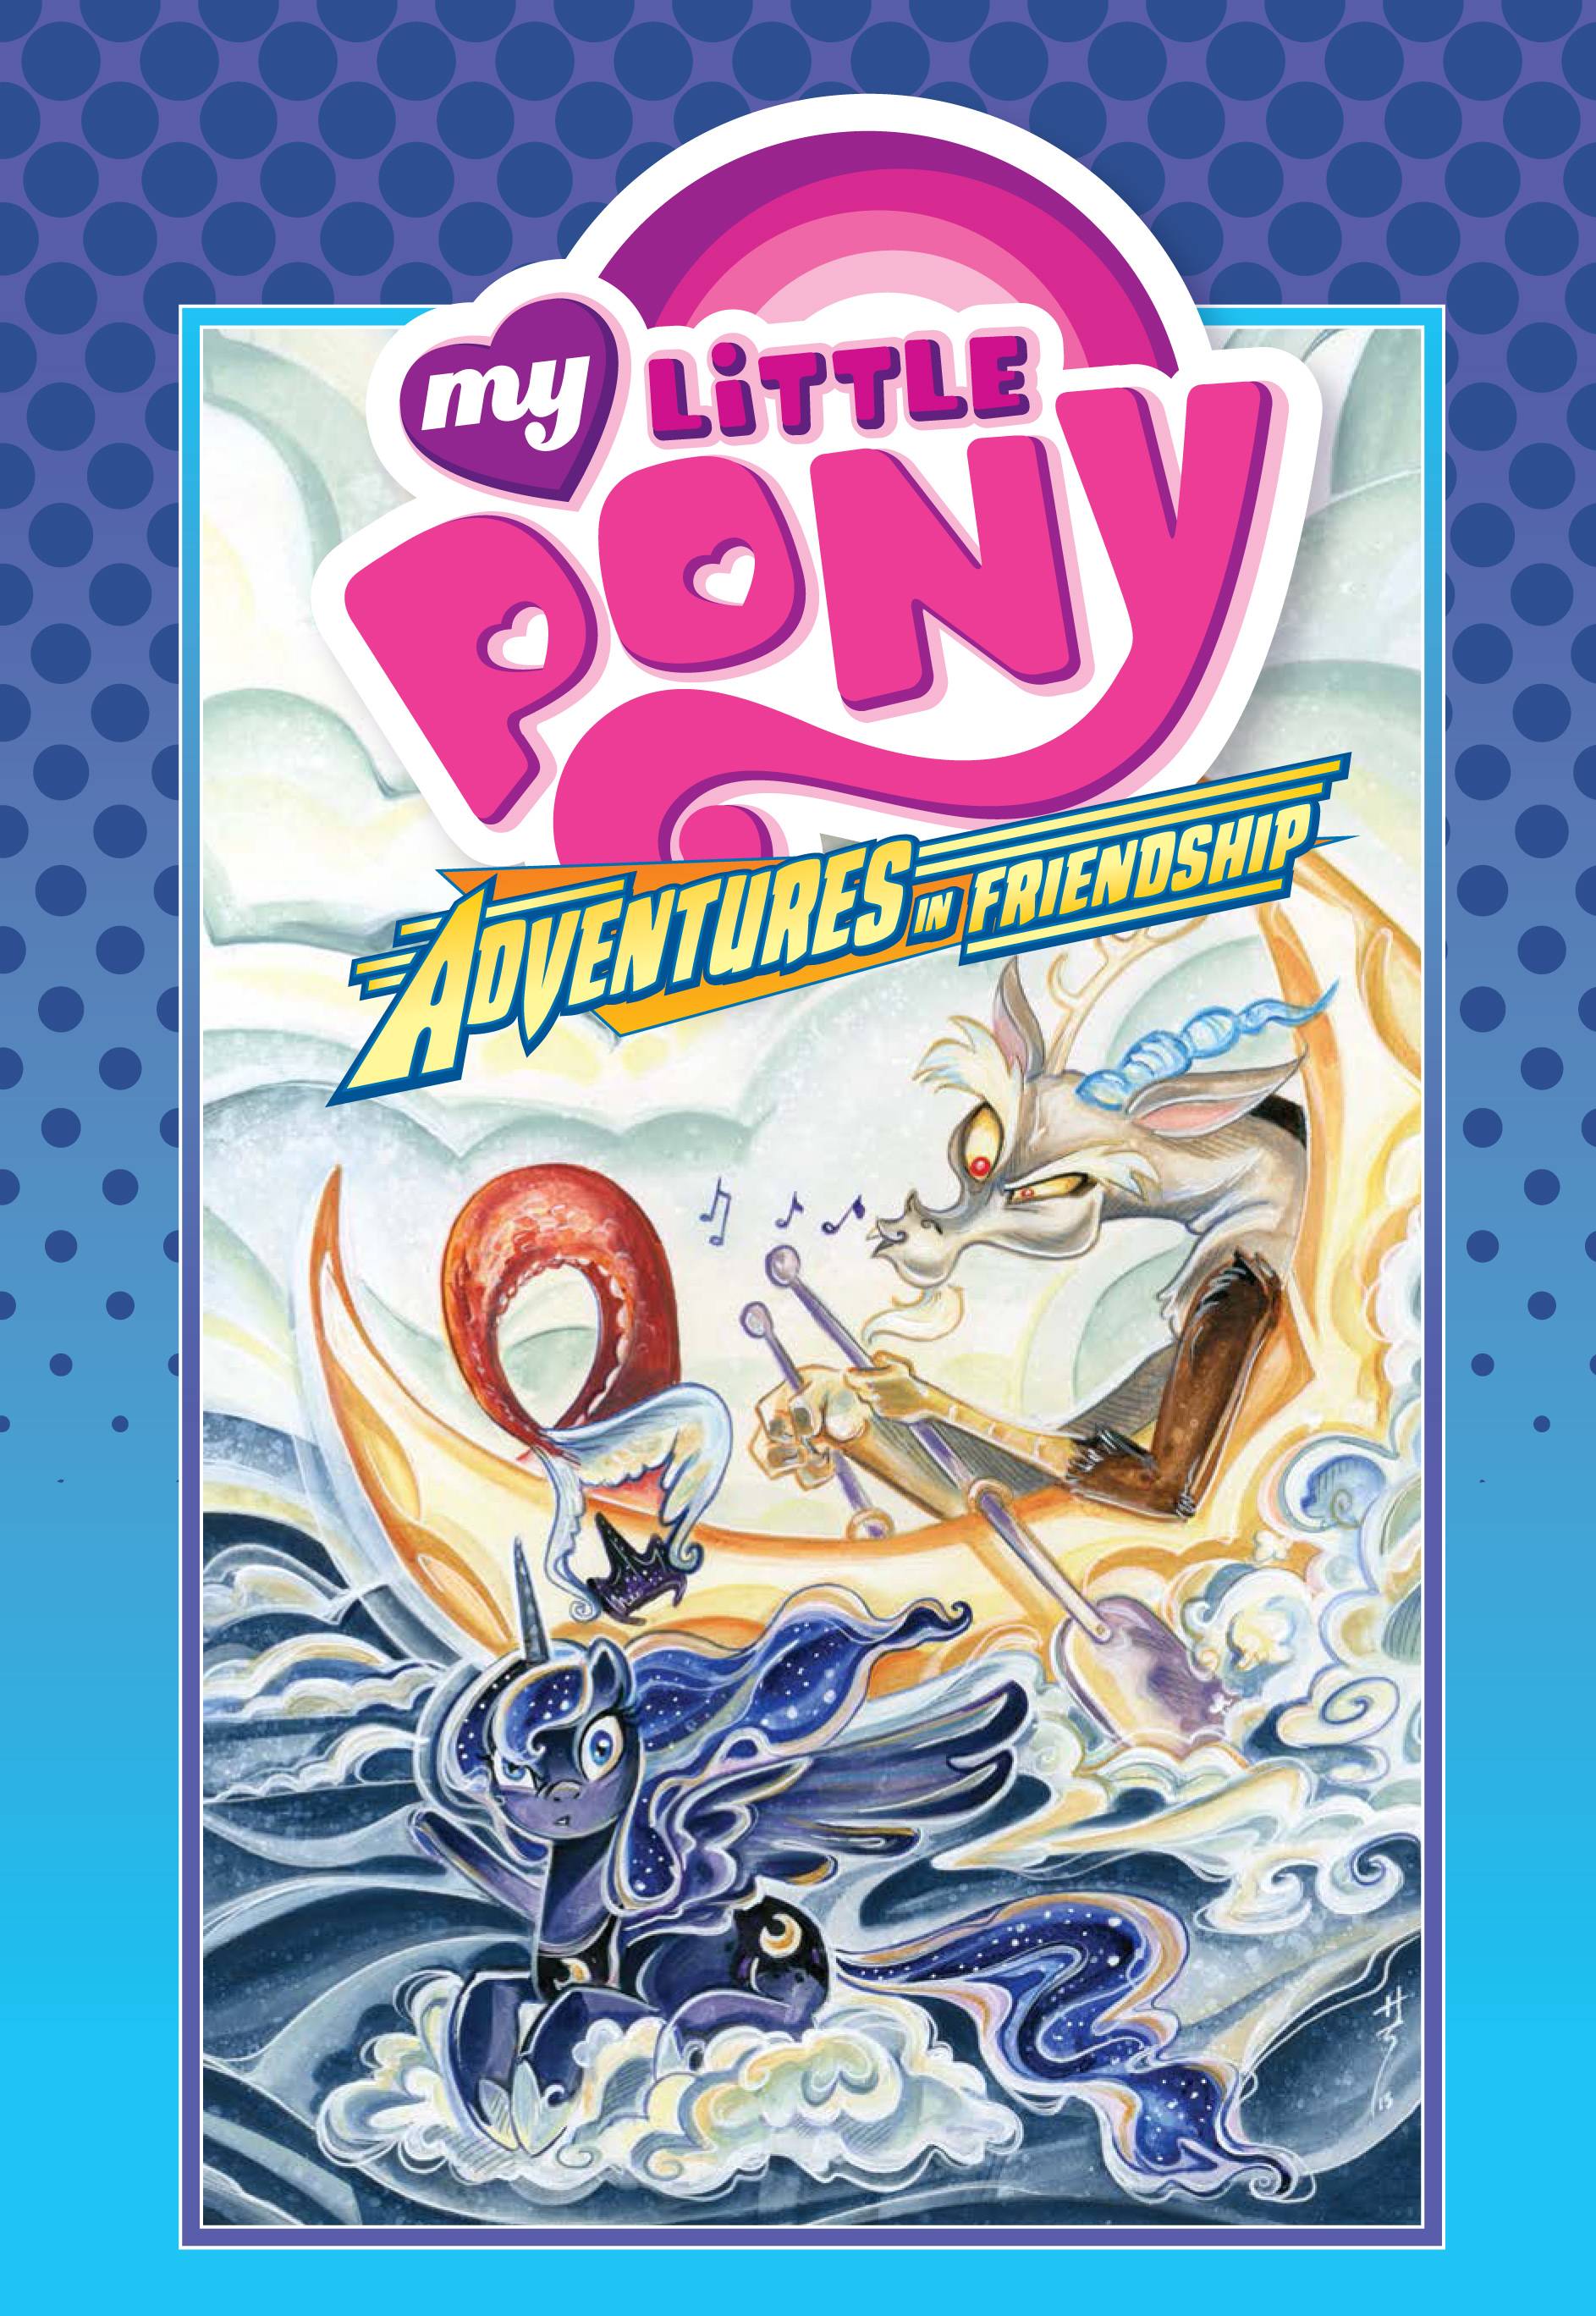 My Little Pony Adventures In Friendship Hardcover Volume 4